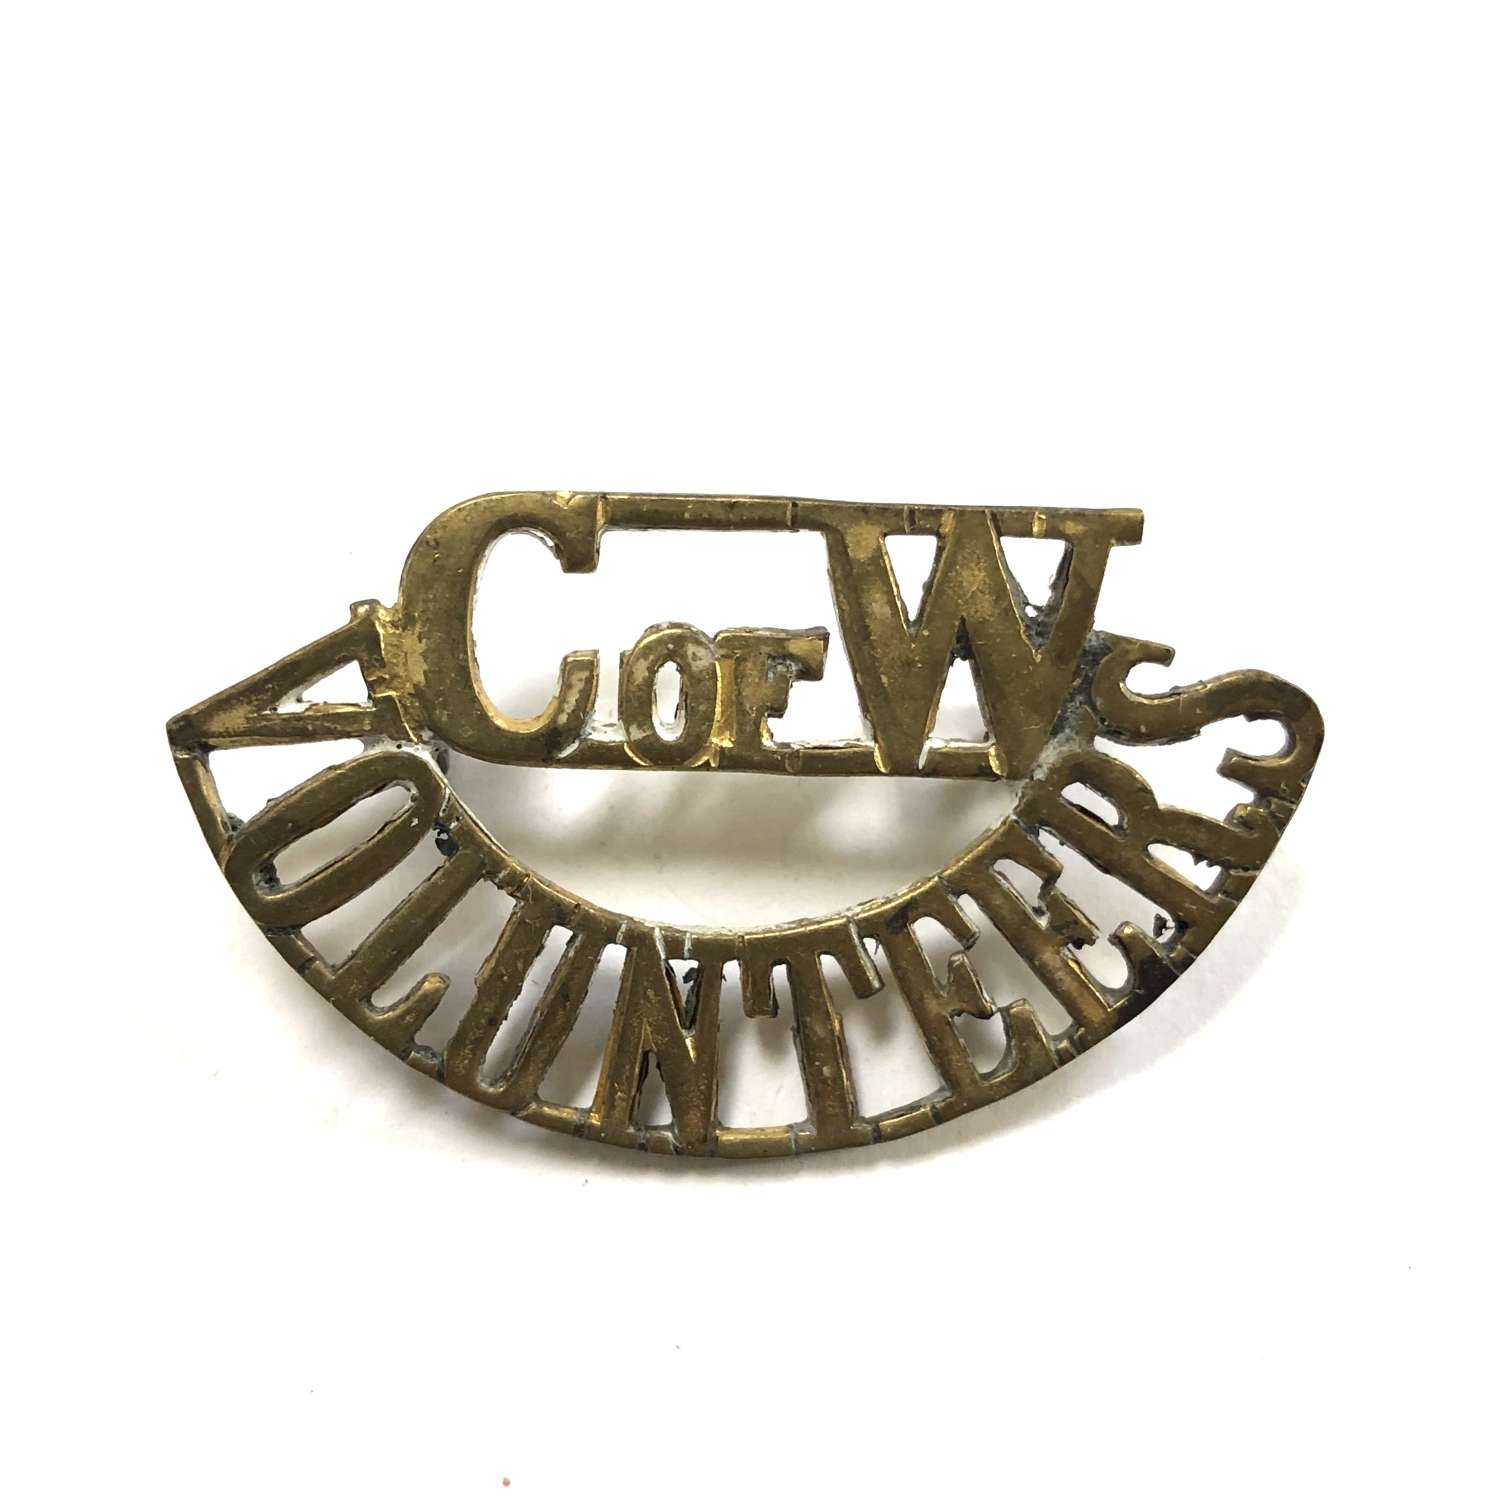 C OF W / VOLUNTEERS WW1 City of Westminster Vols. VTC shoulder  title